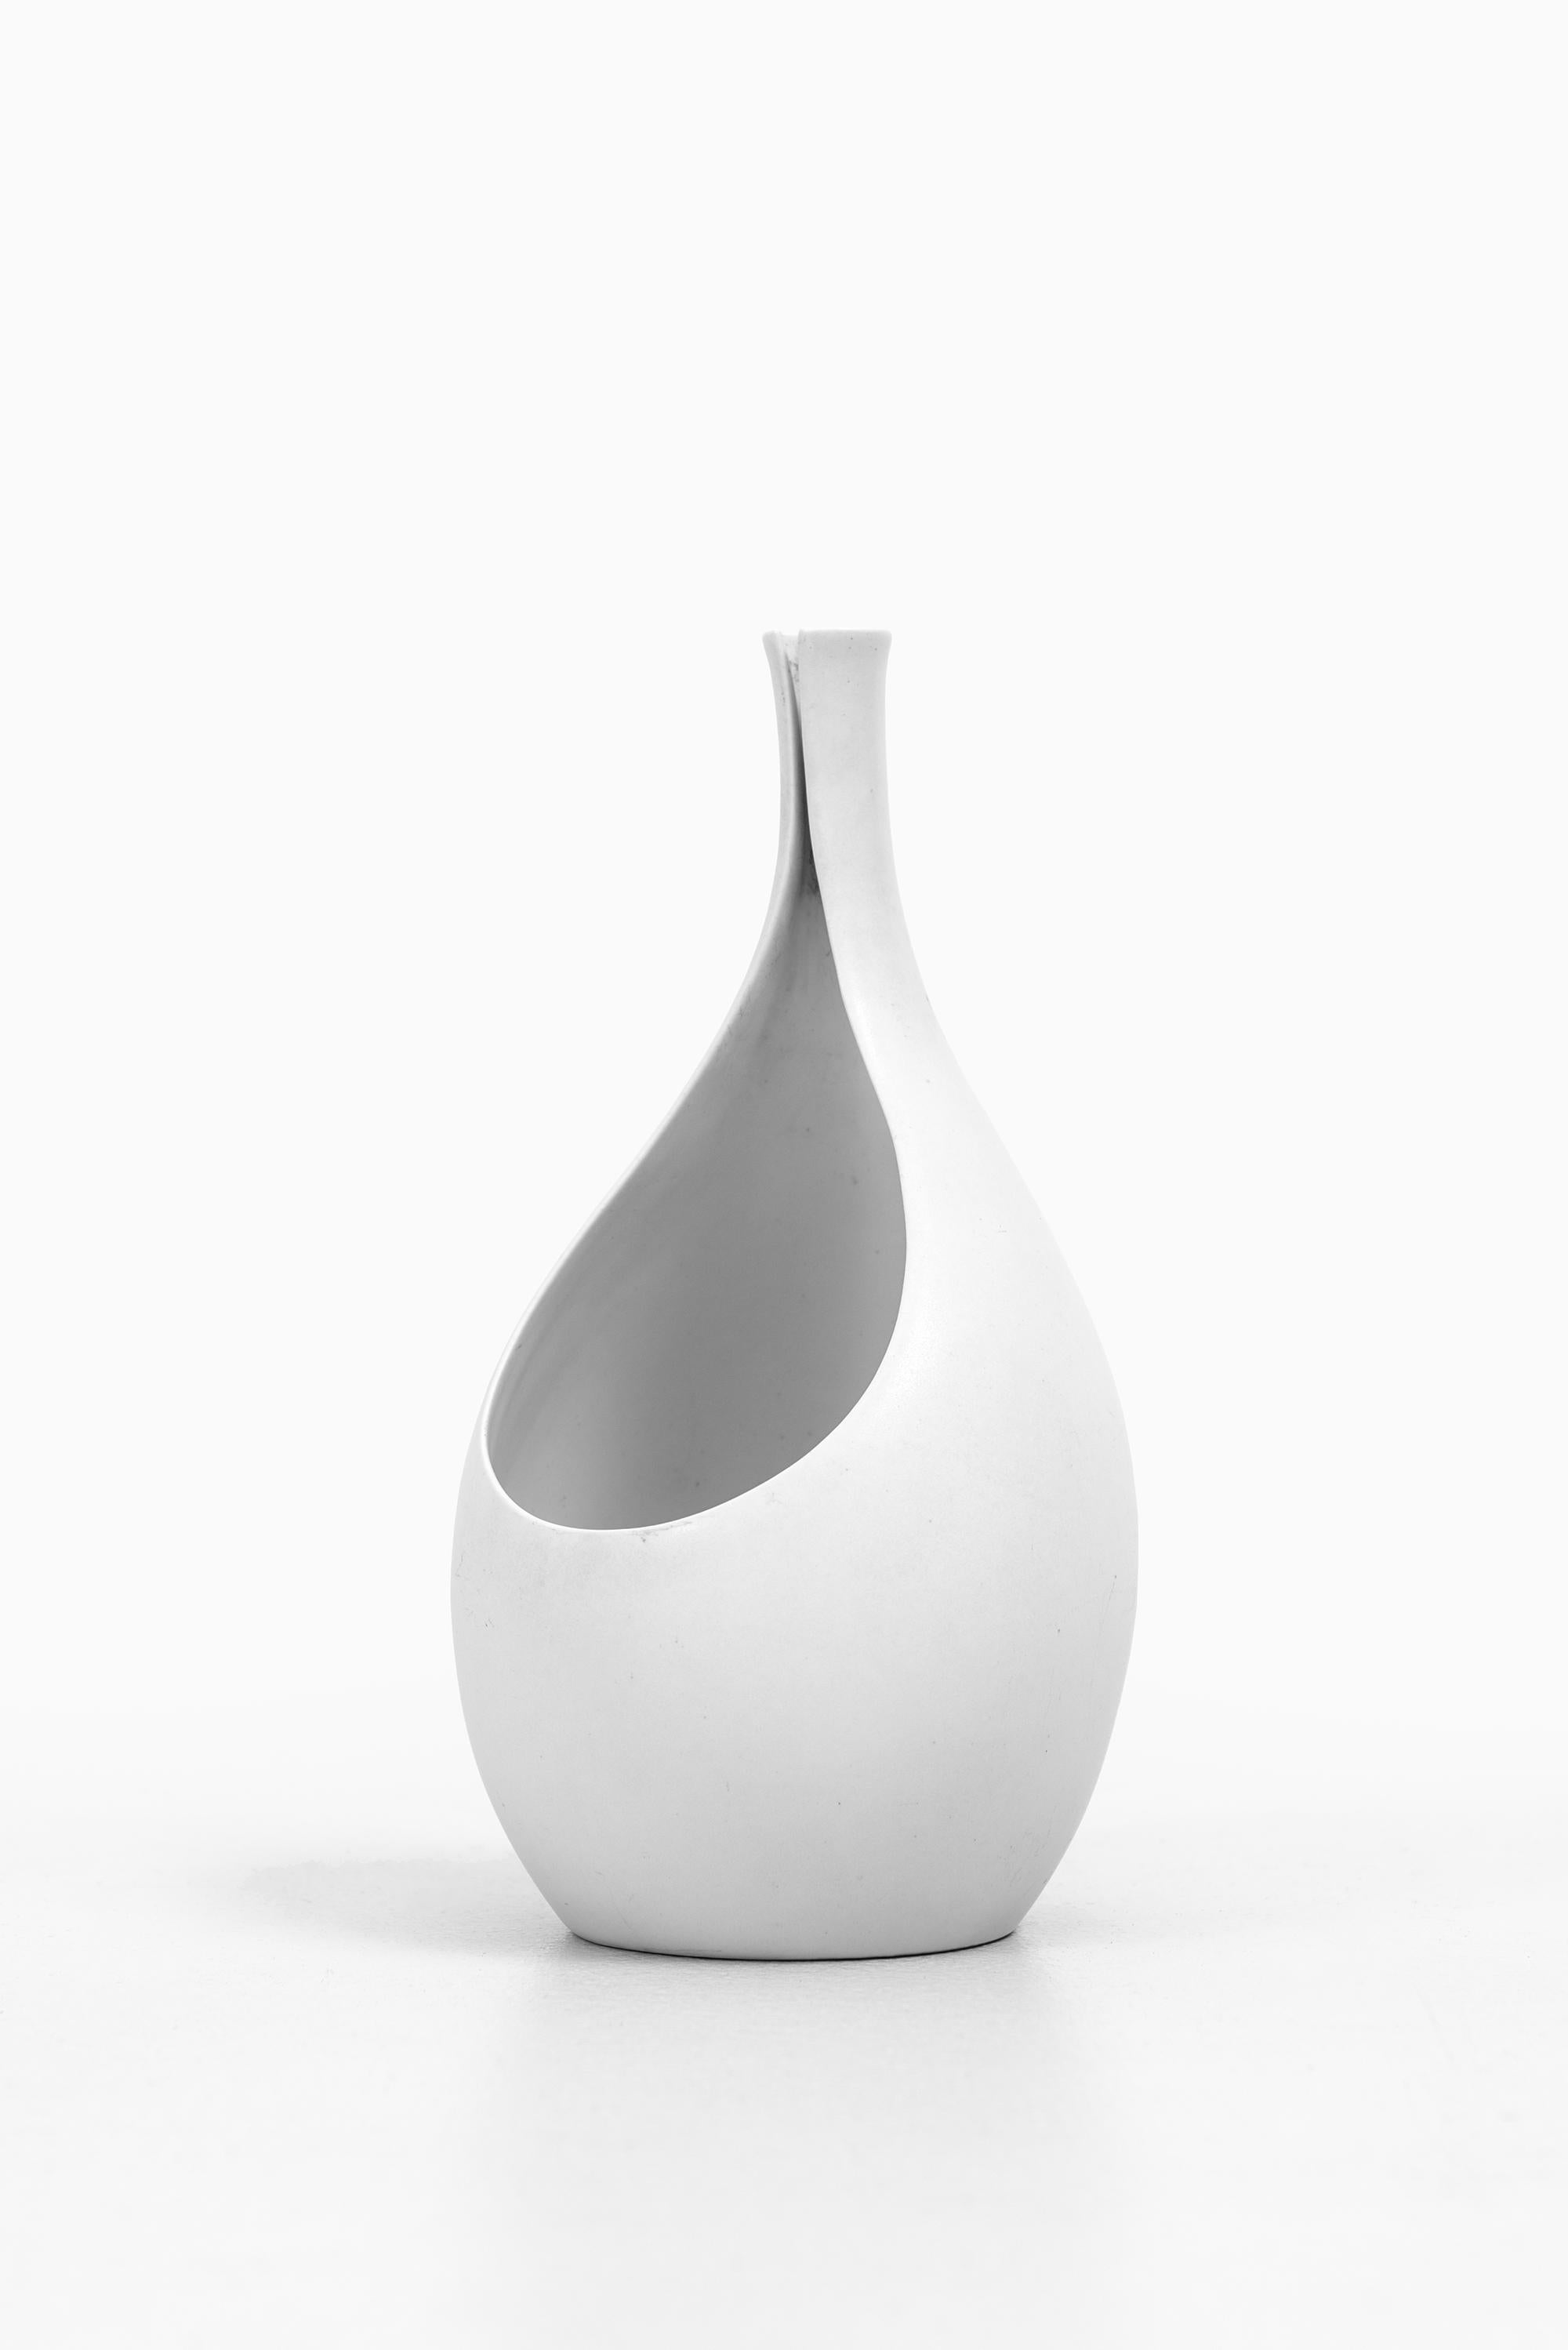 Scandinavian Modern Stig Lindberg Ceramic Vase Model Pungo by Gustavsberg in Sweden For Sale